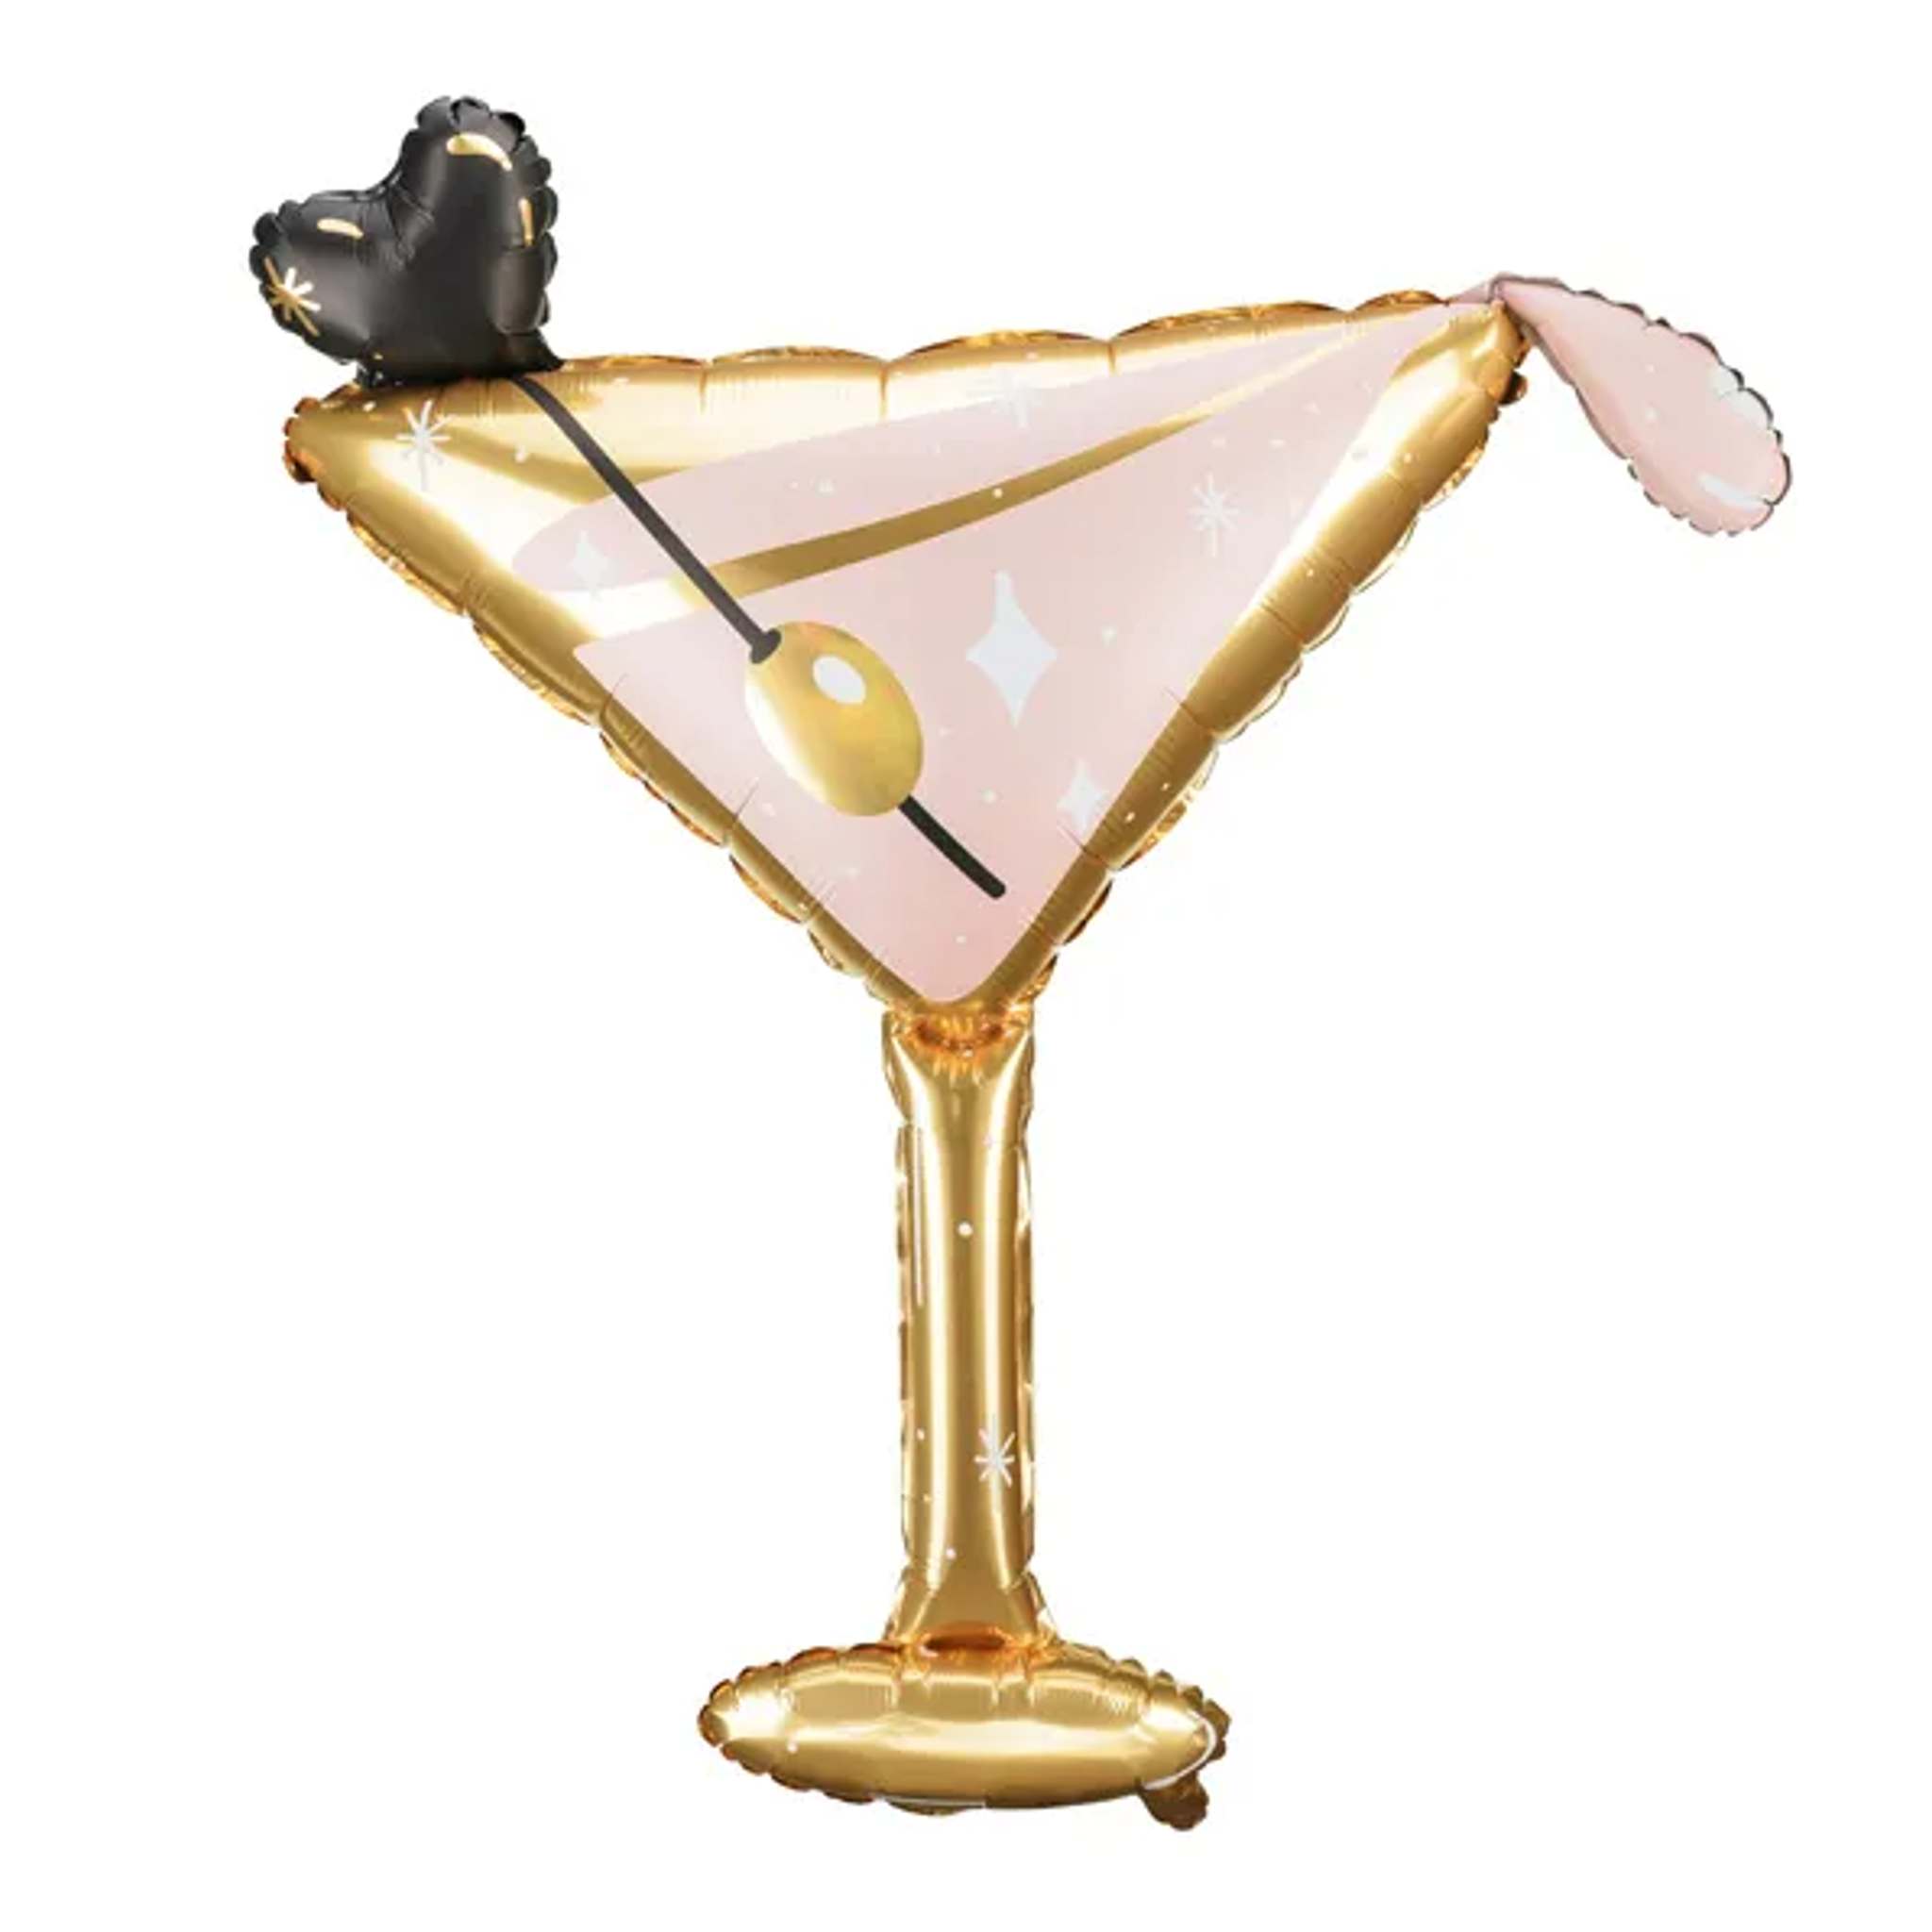 birthday martini clipart